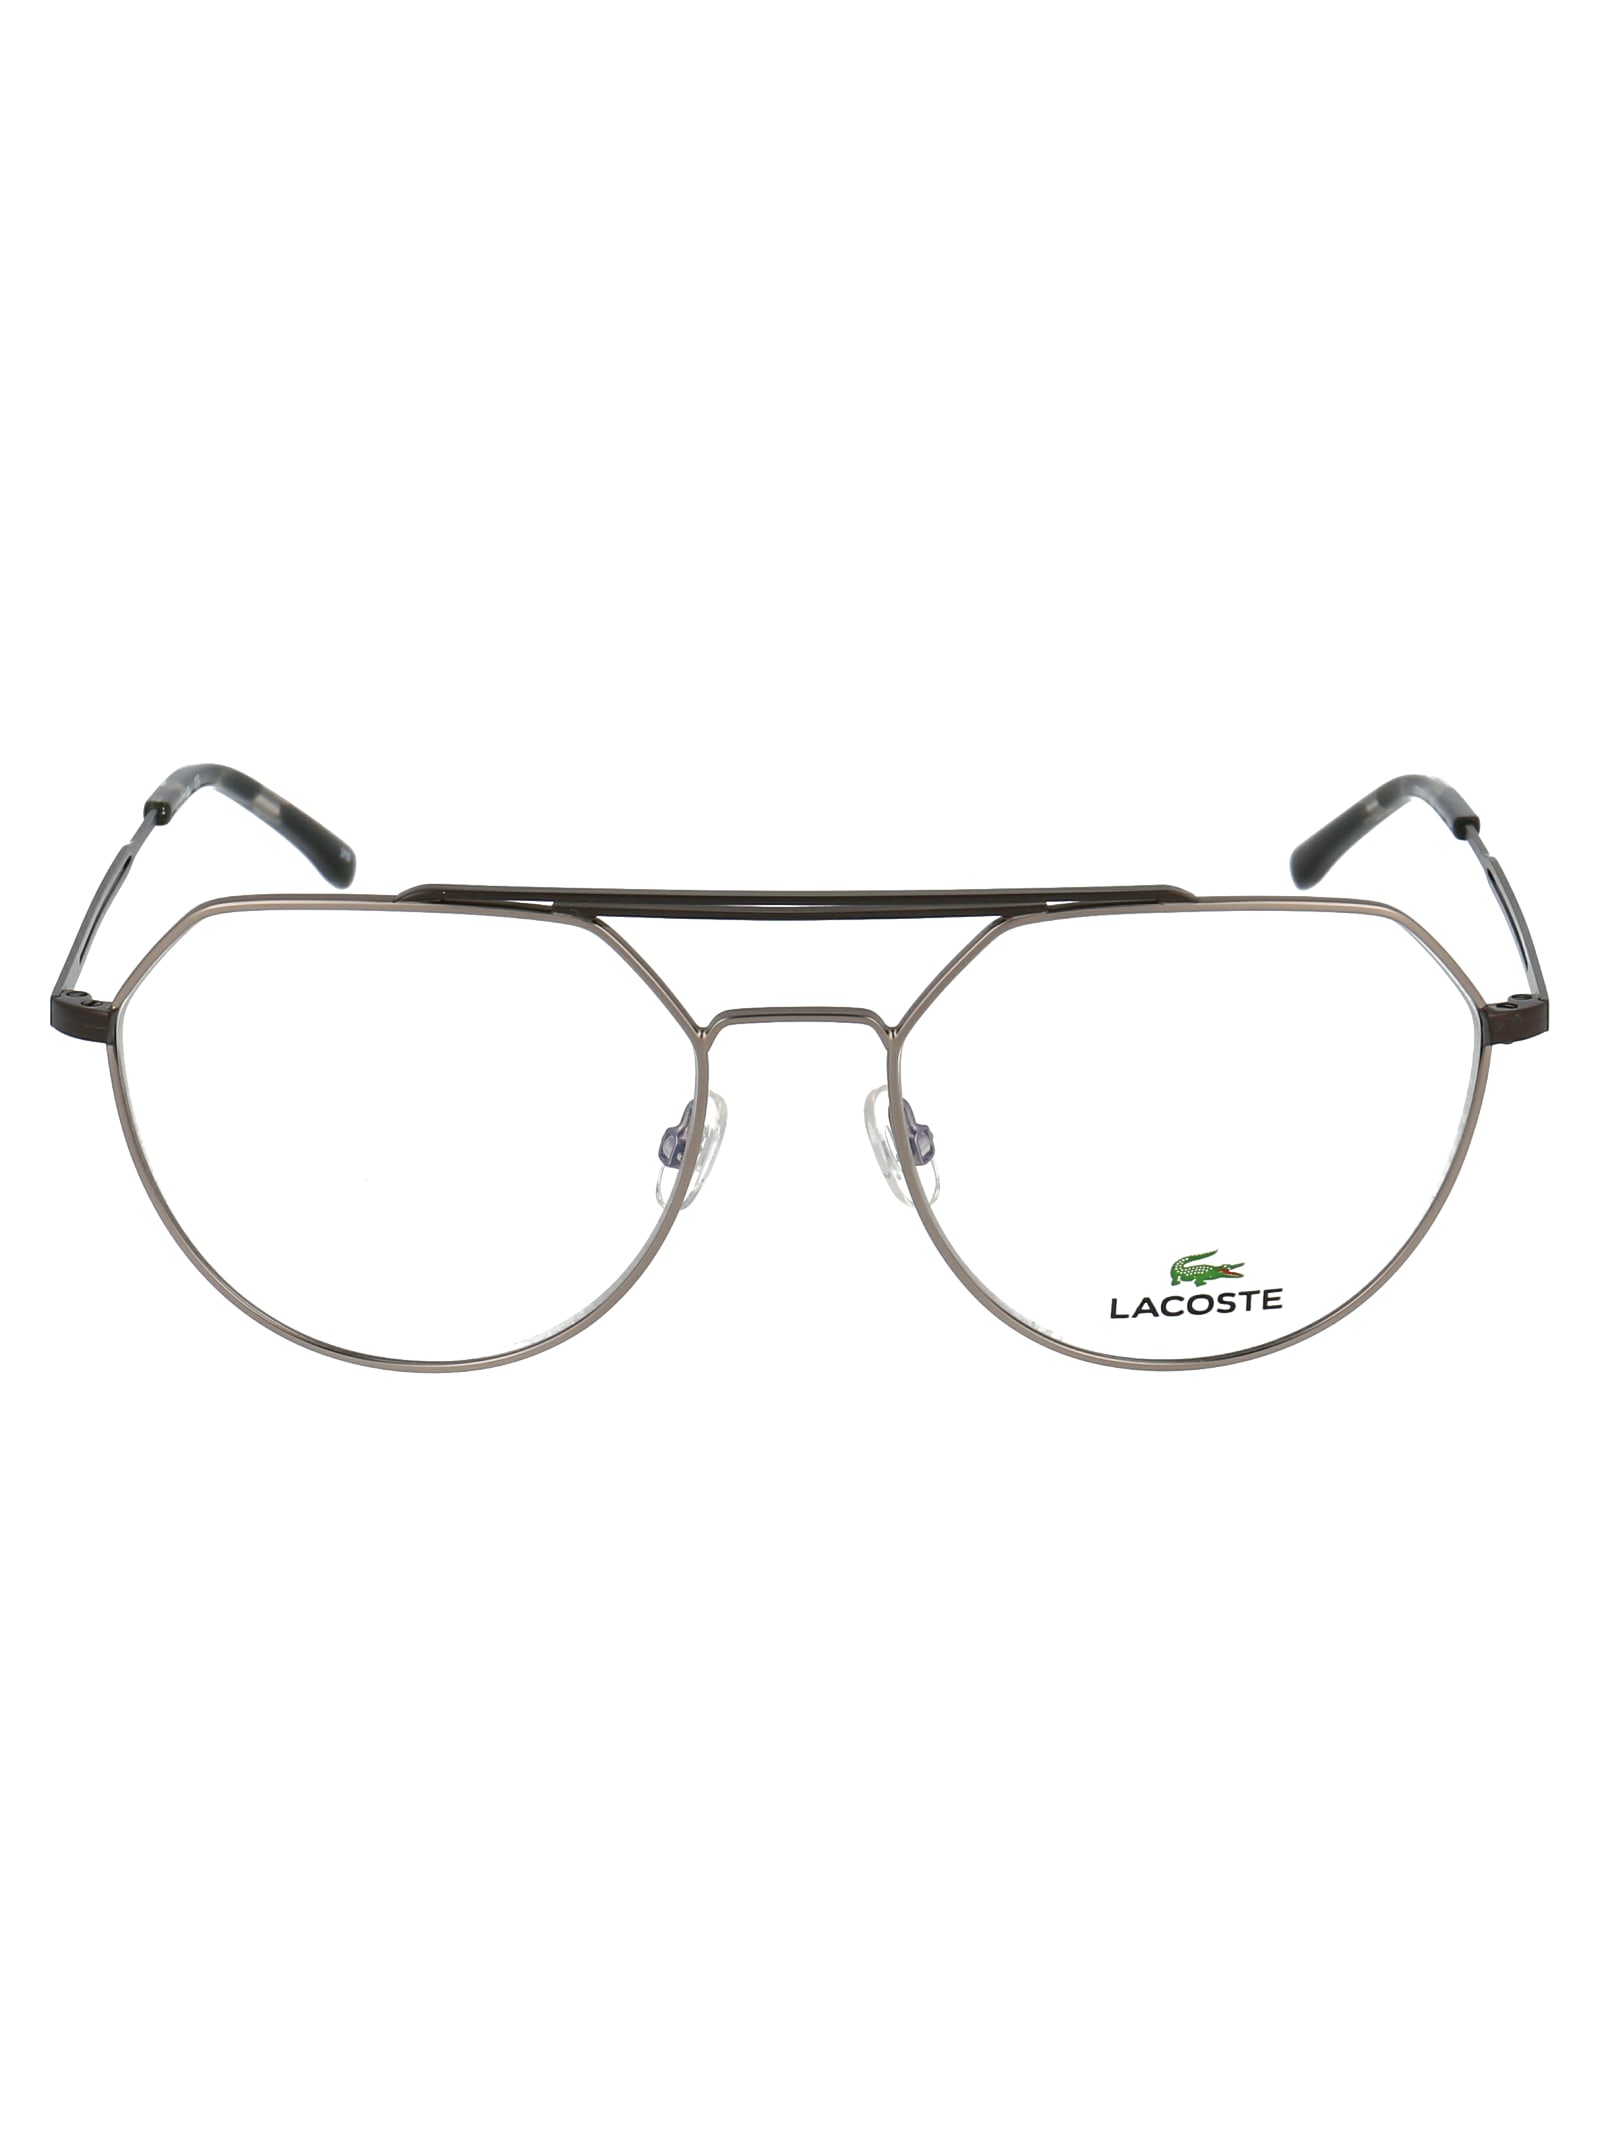 Lacoste L2256pc Glasses In 035 Matte Light Ruthenium/grey Havana